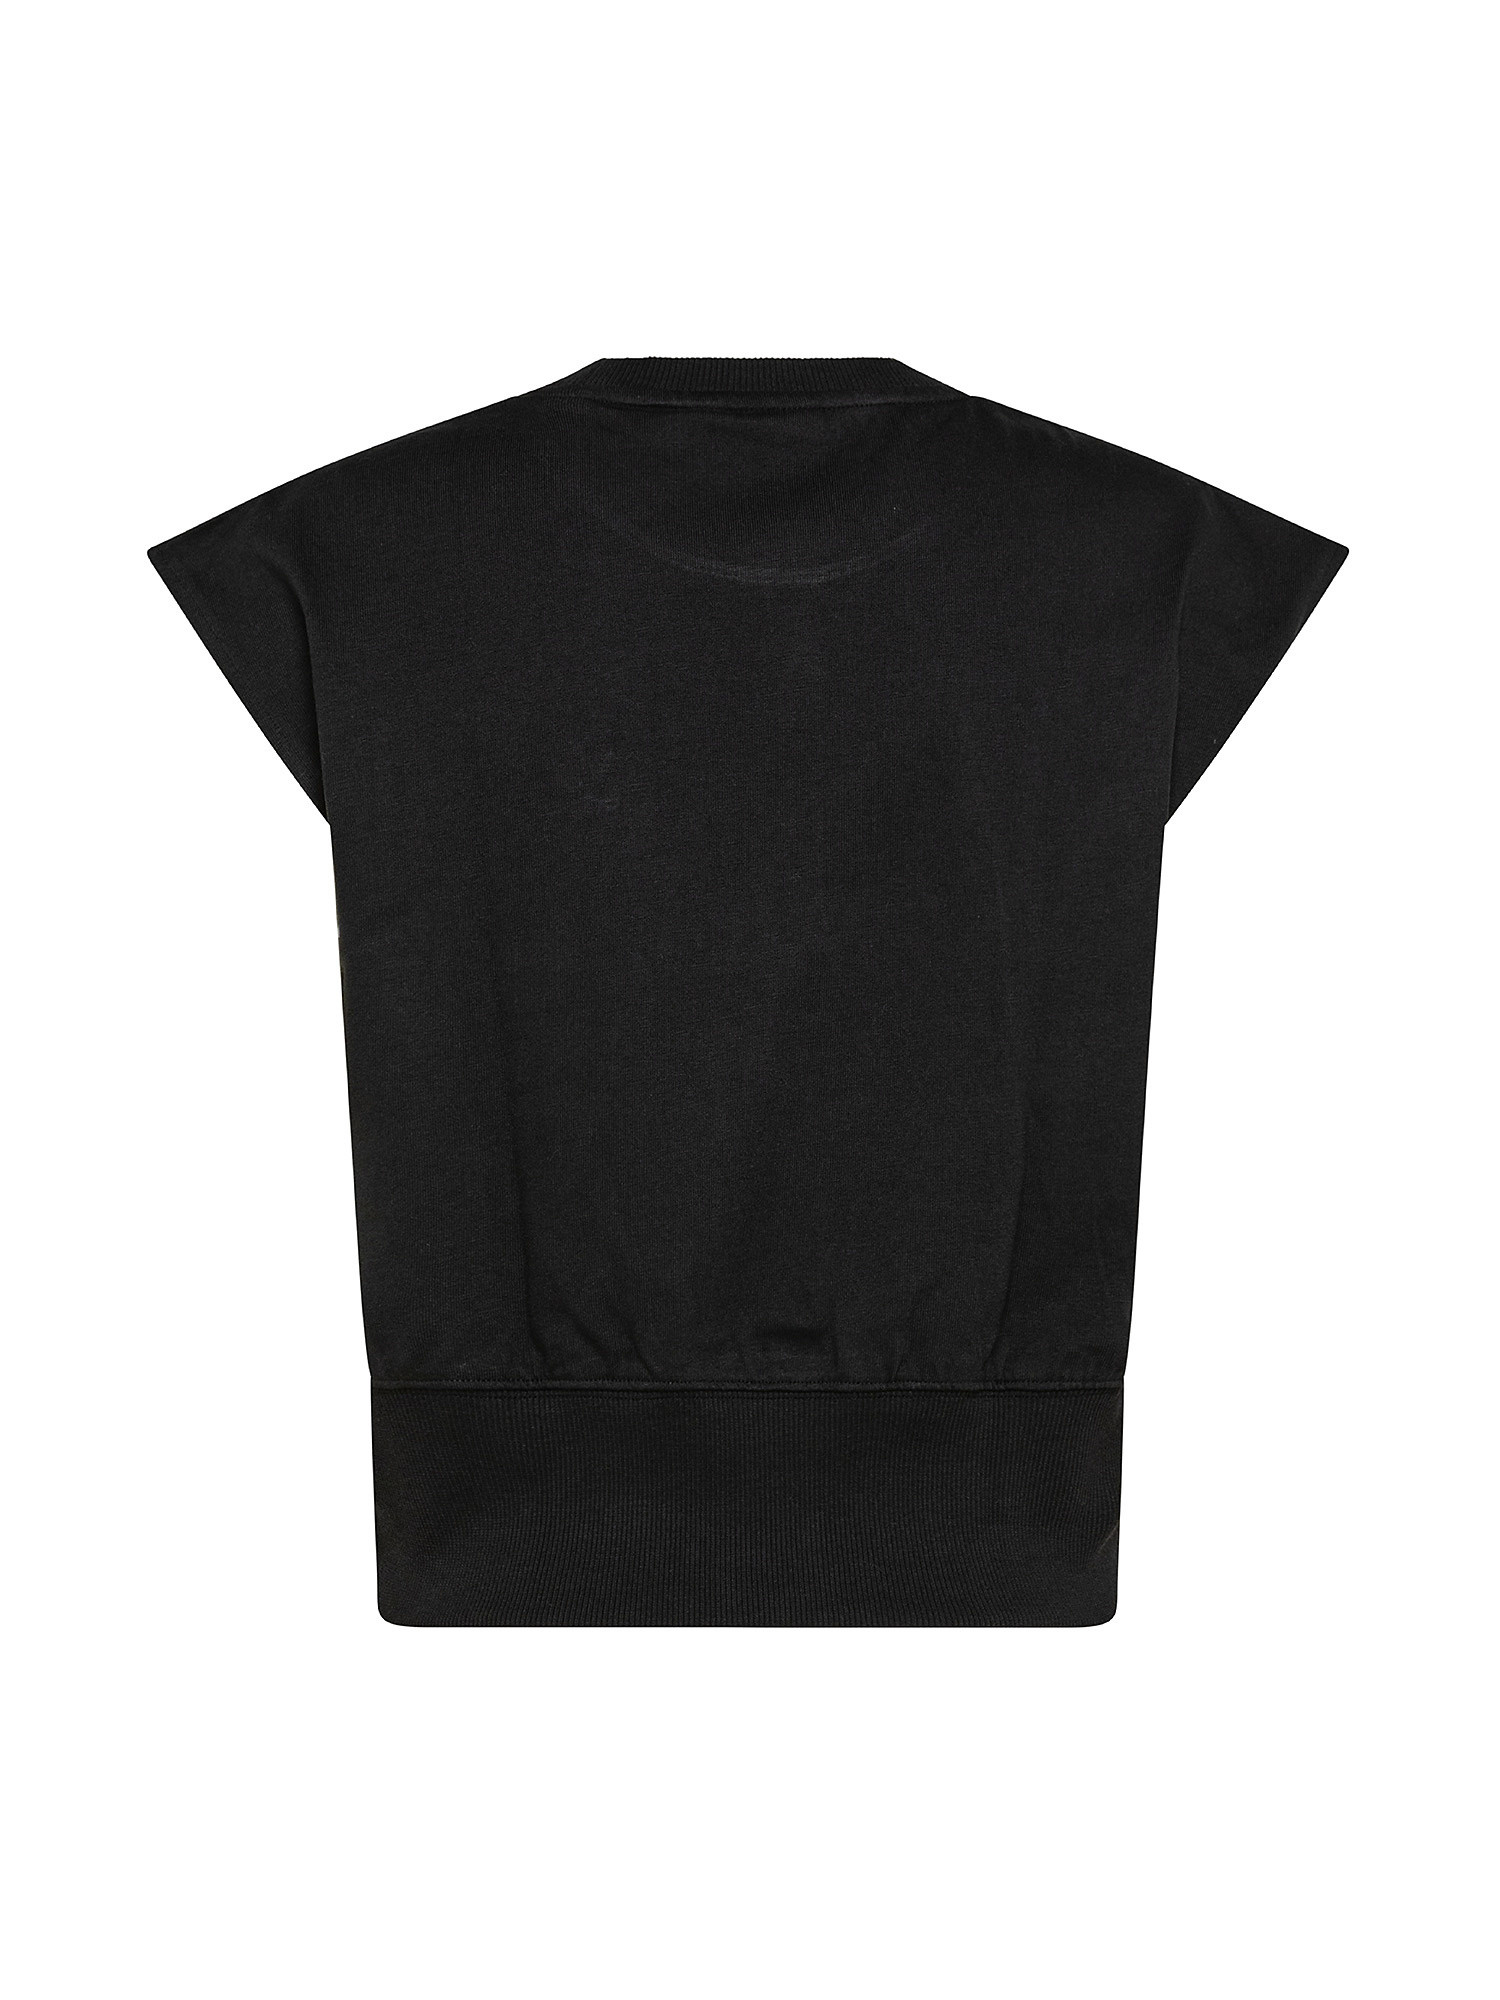 Adidas - Adicolor T-shirt with logo, Black, large image number 1